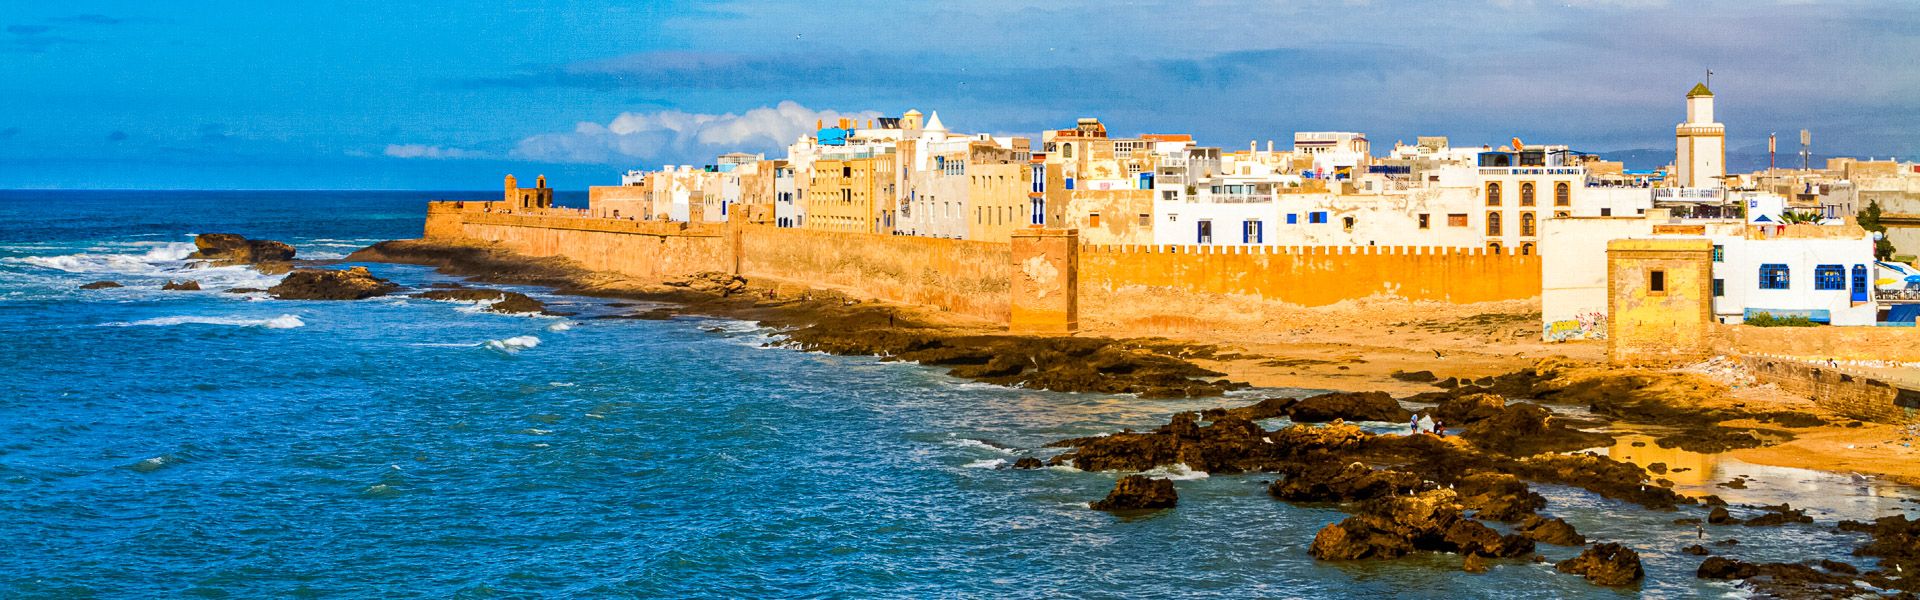 Blick auf Essaouira |  Matej Kastelic, iStockphoto.com / Chamleon